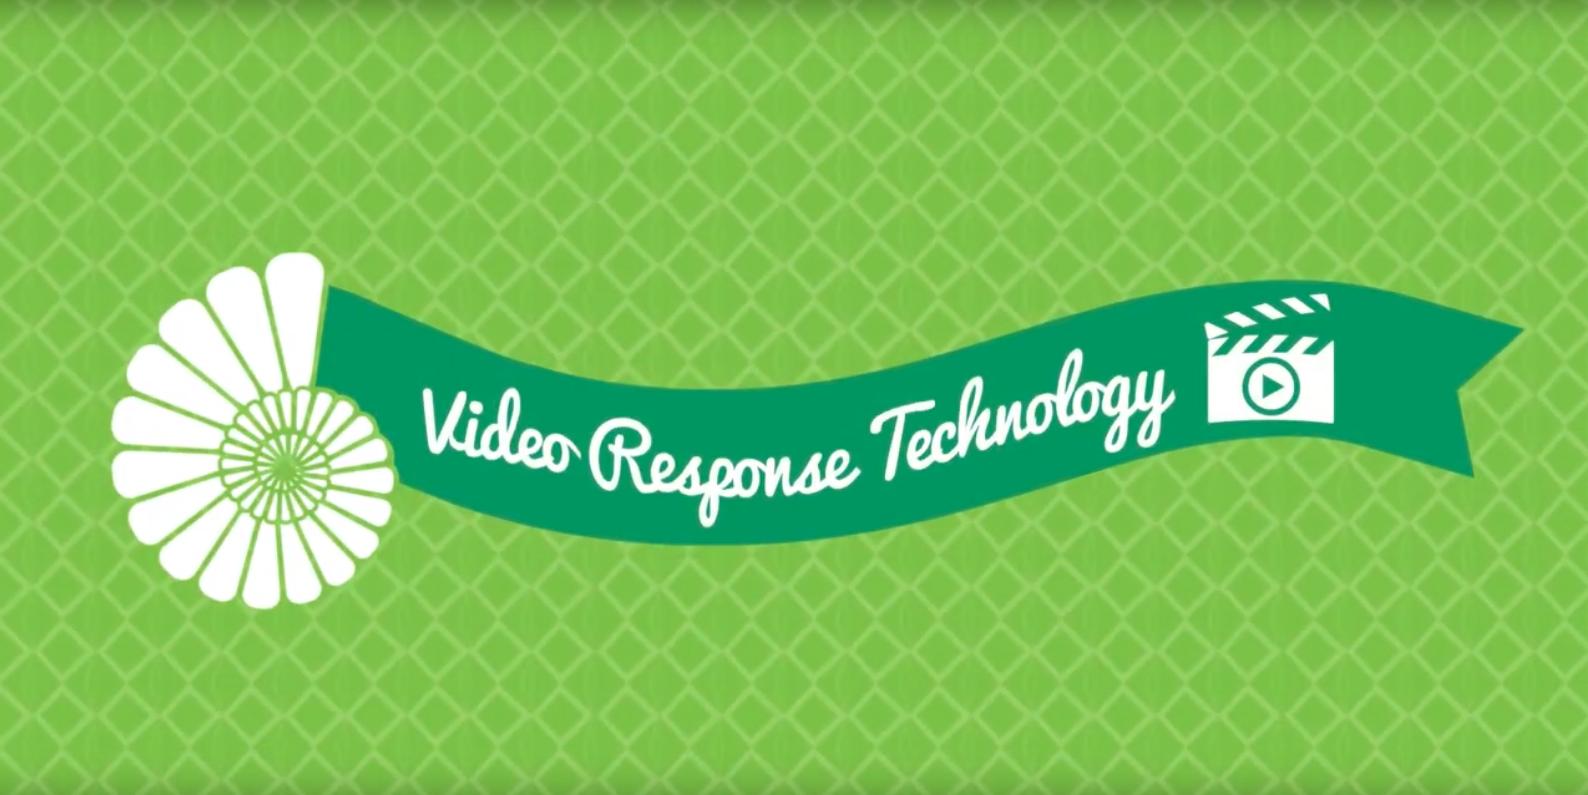 video response technology